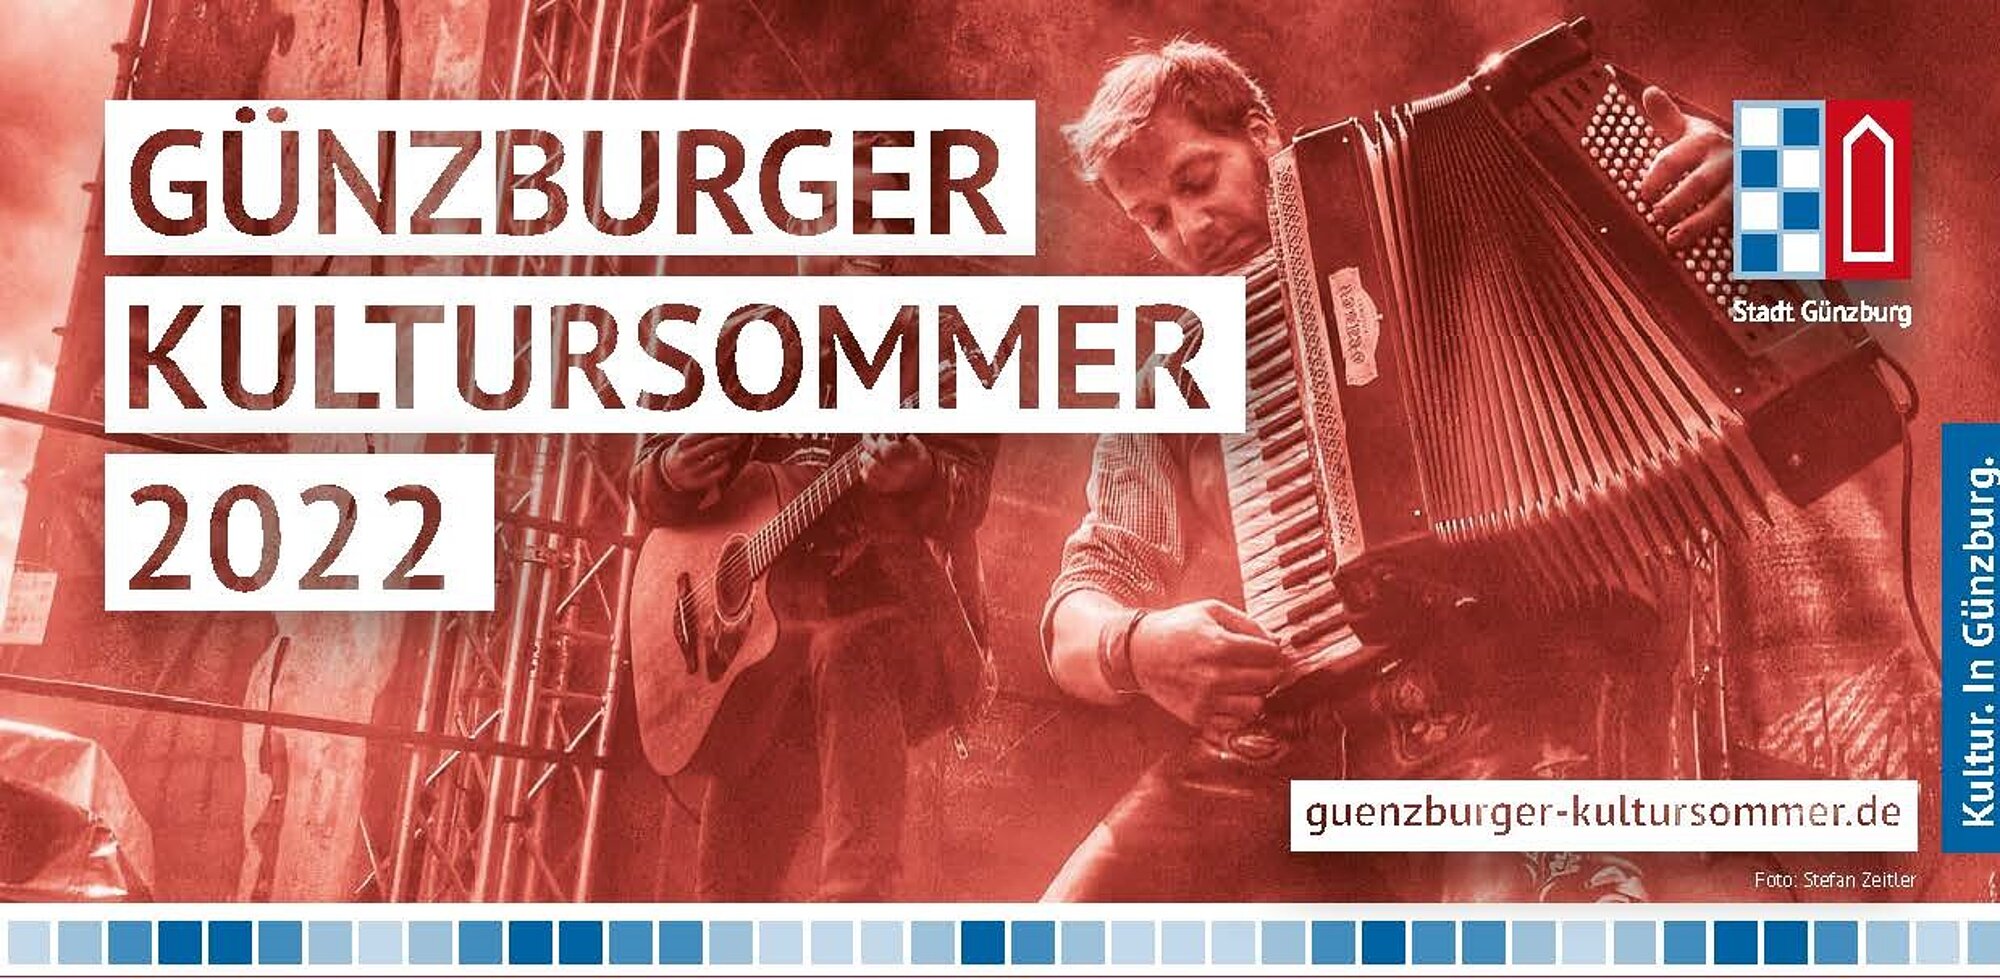 Günzburger Kultursommer 2022